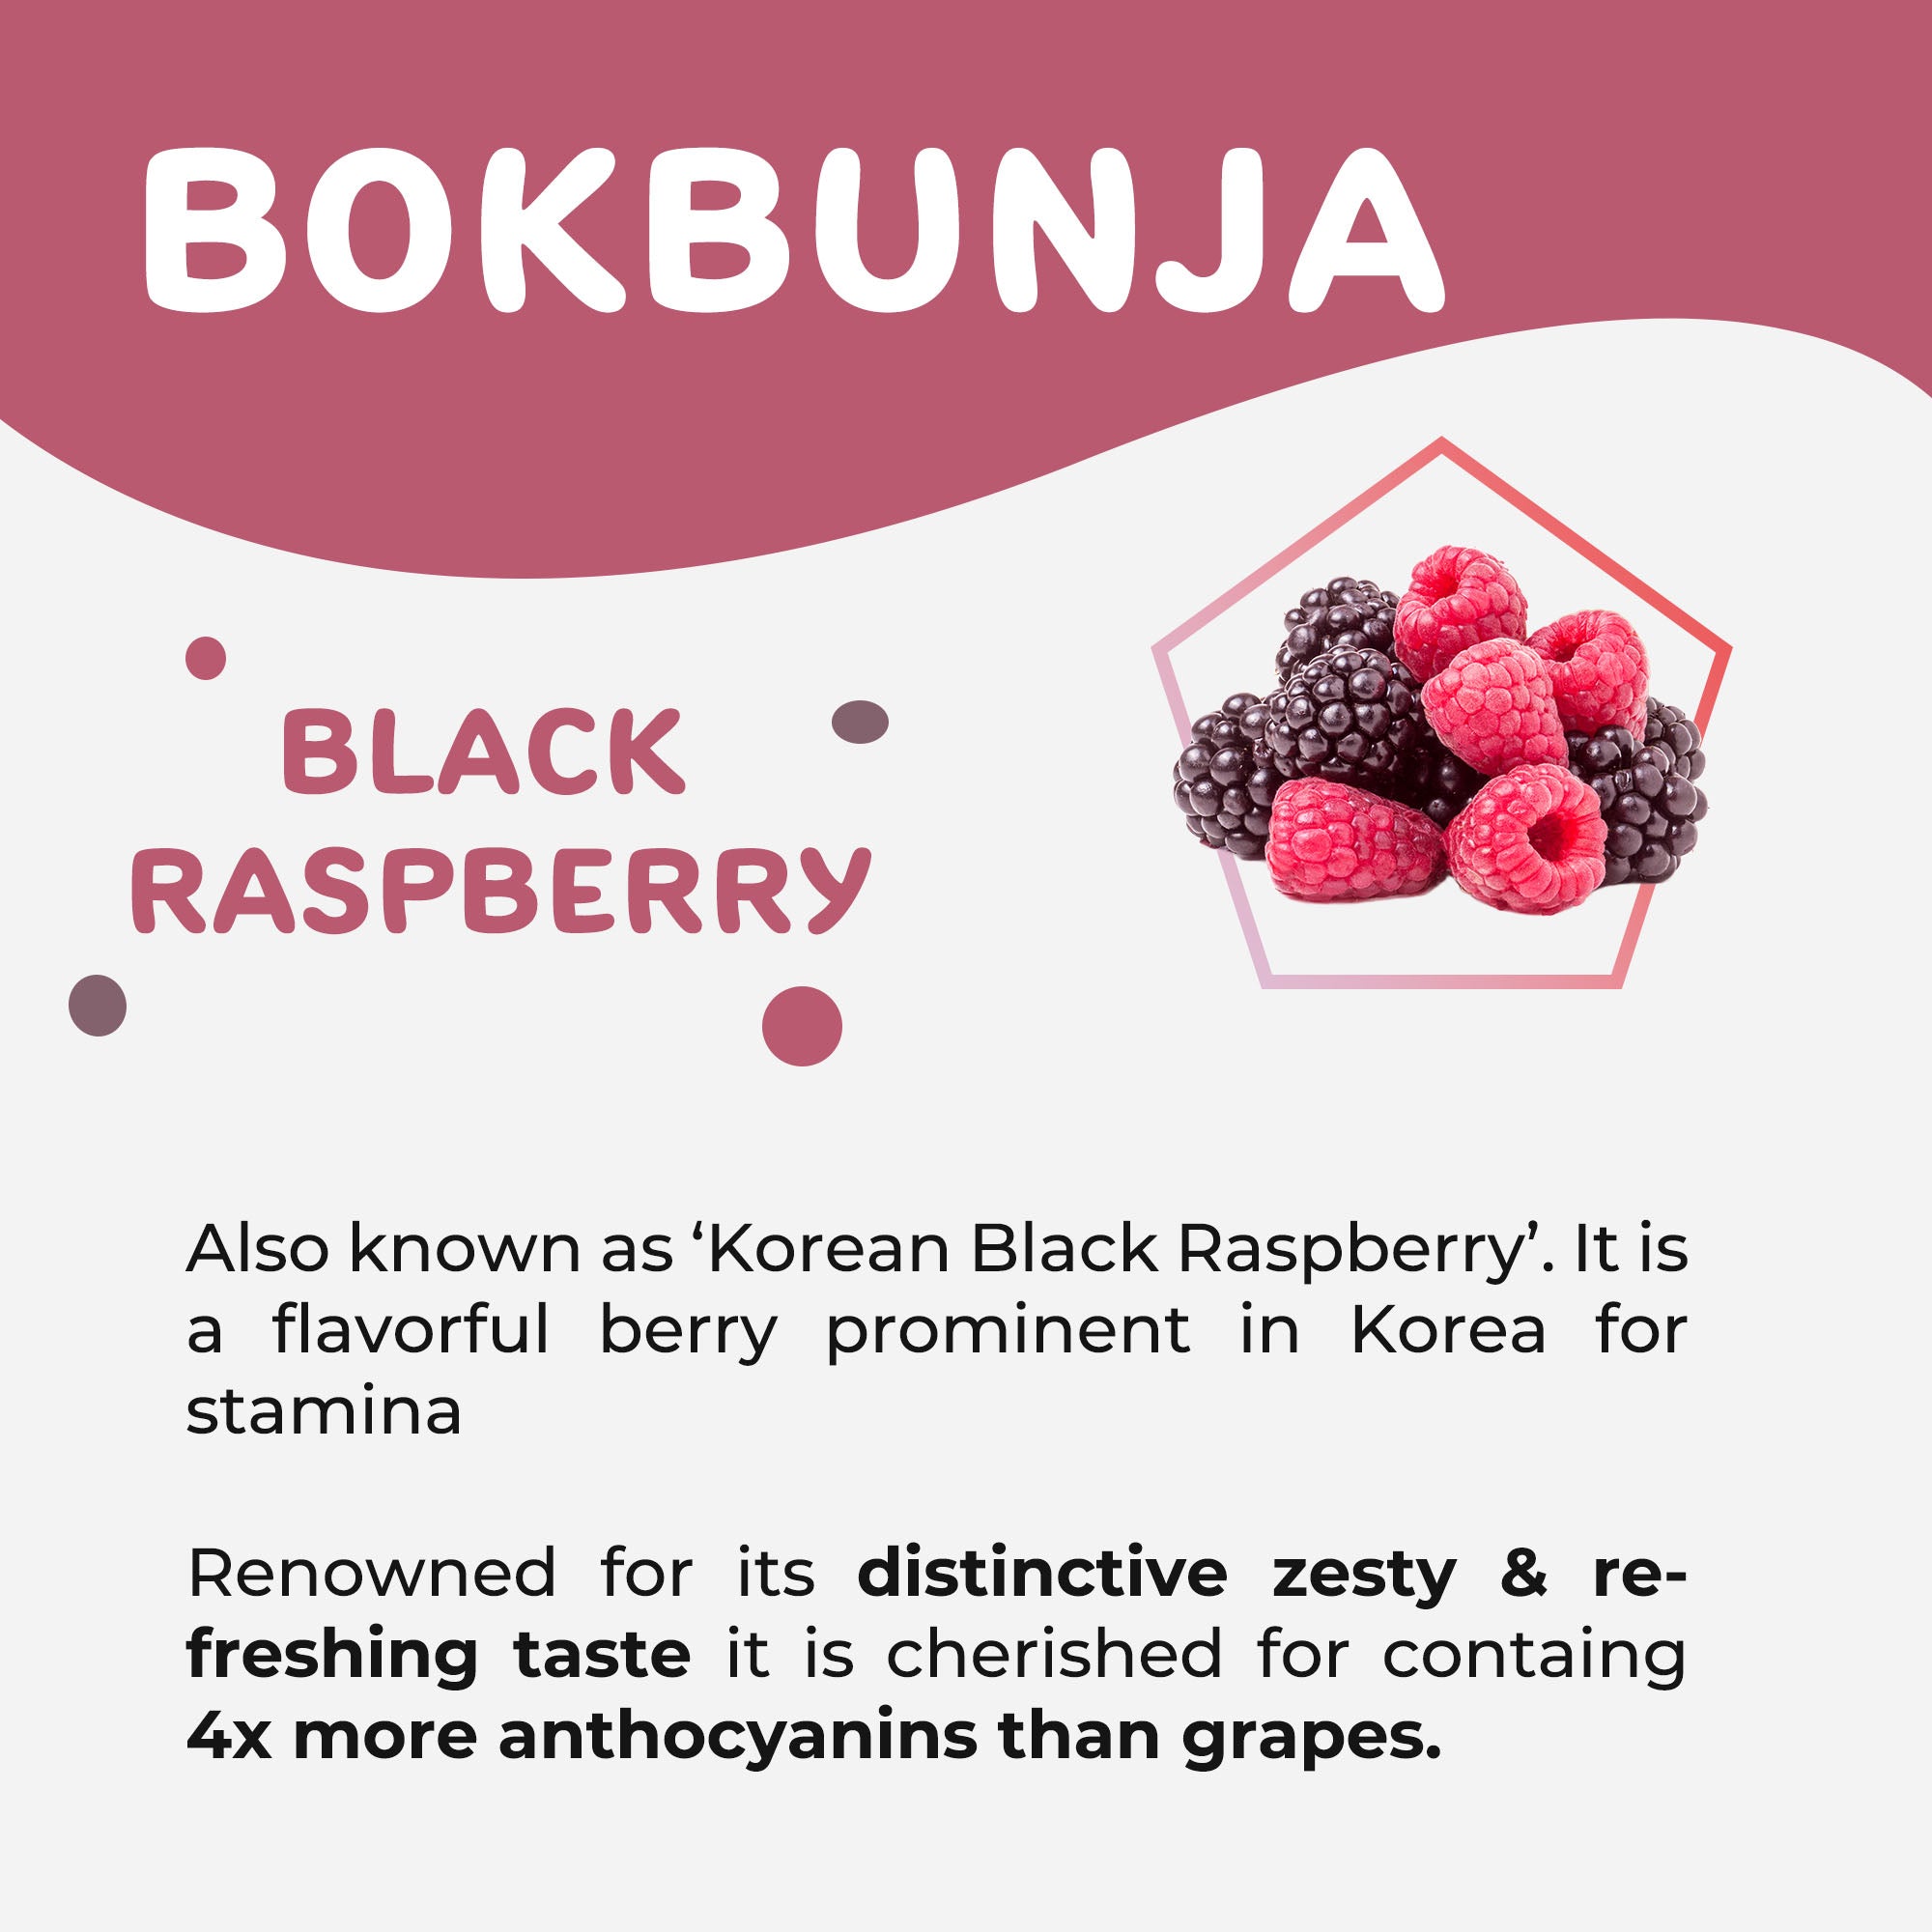 Feature of Black Raspberry(Bokbunja)